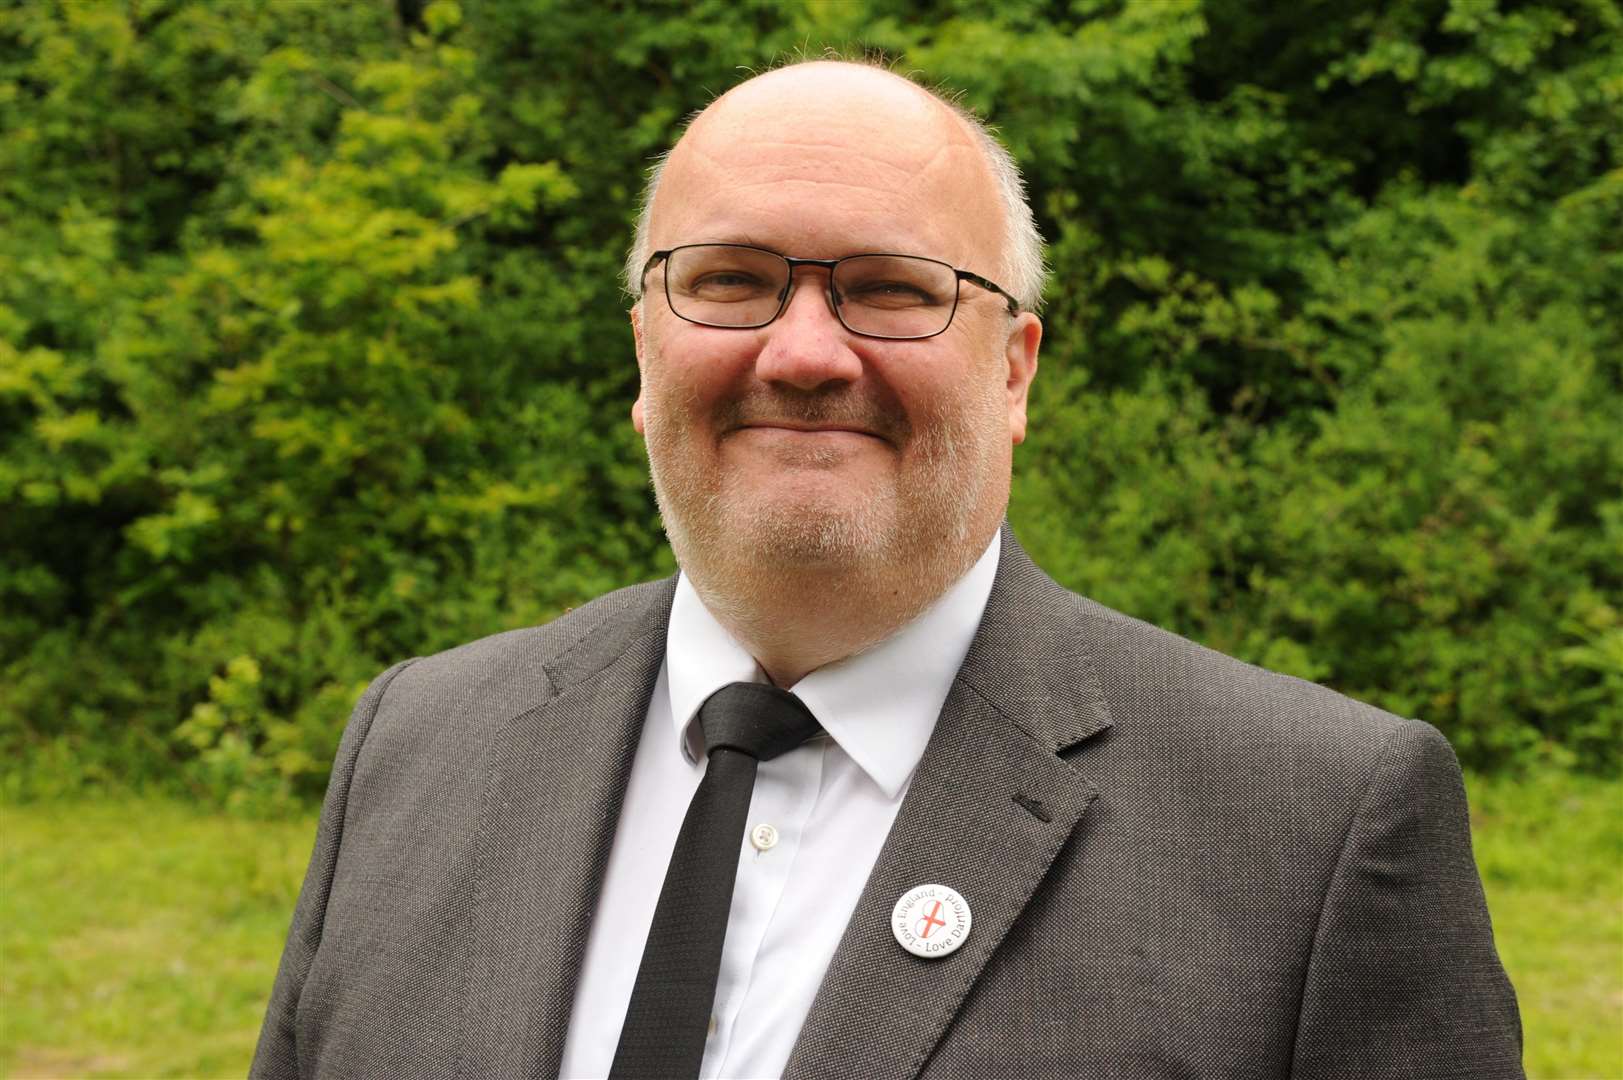 Council leader Jeremy Kite